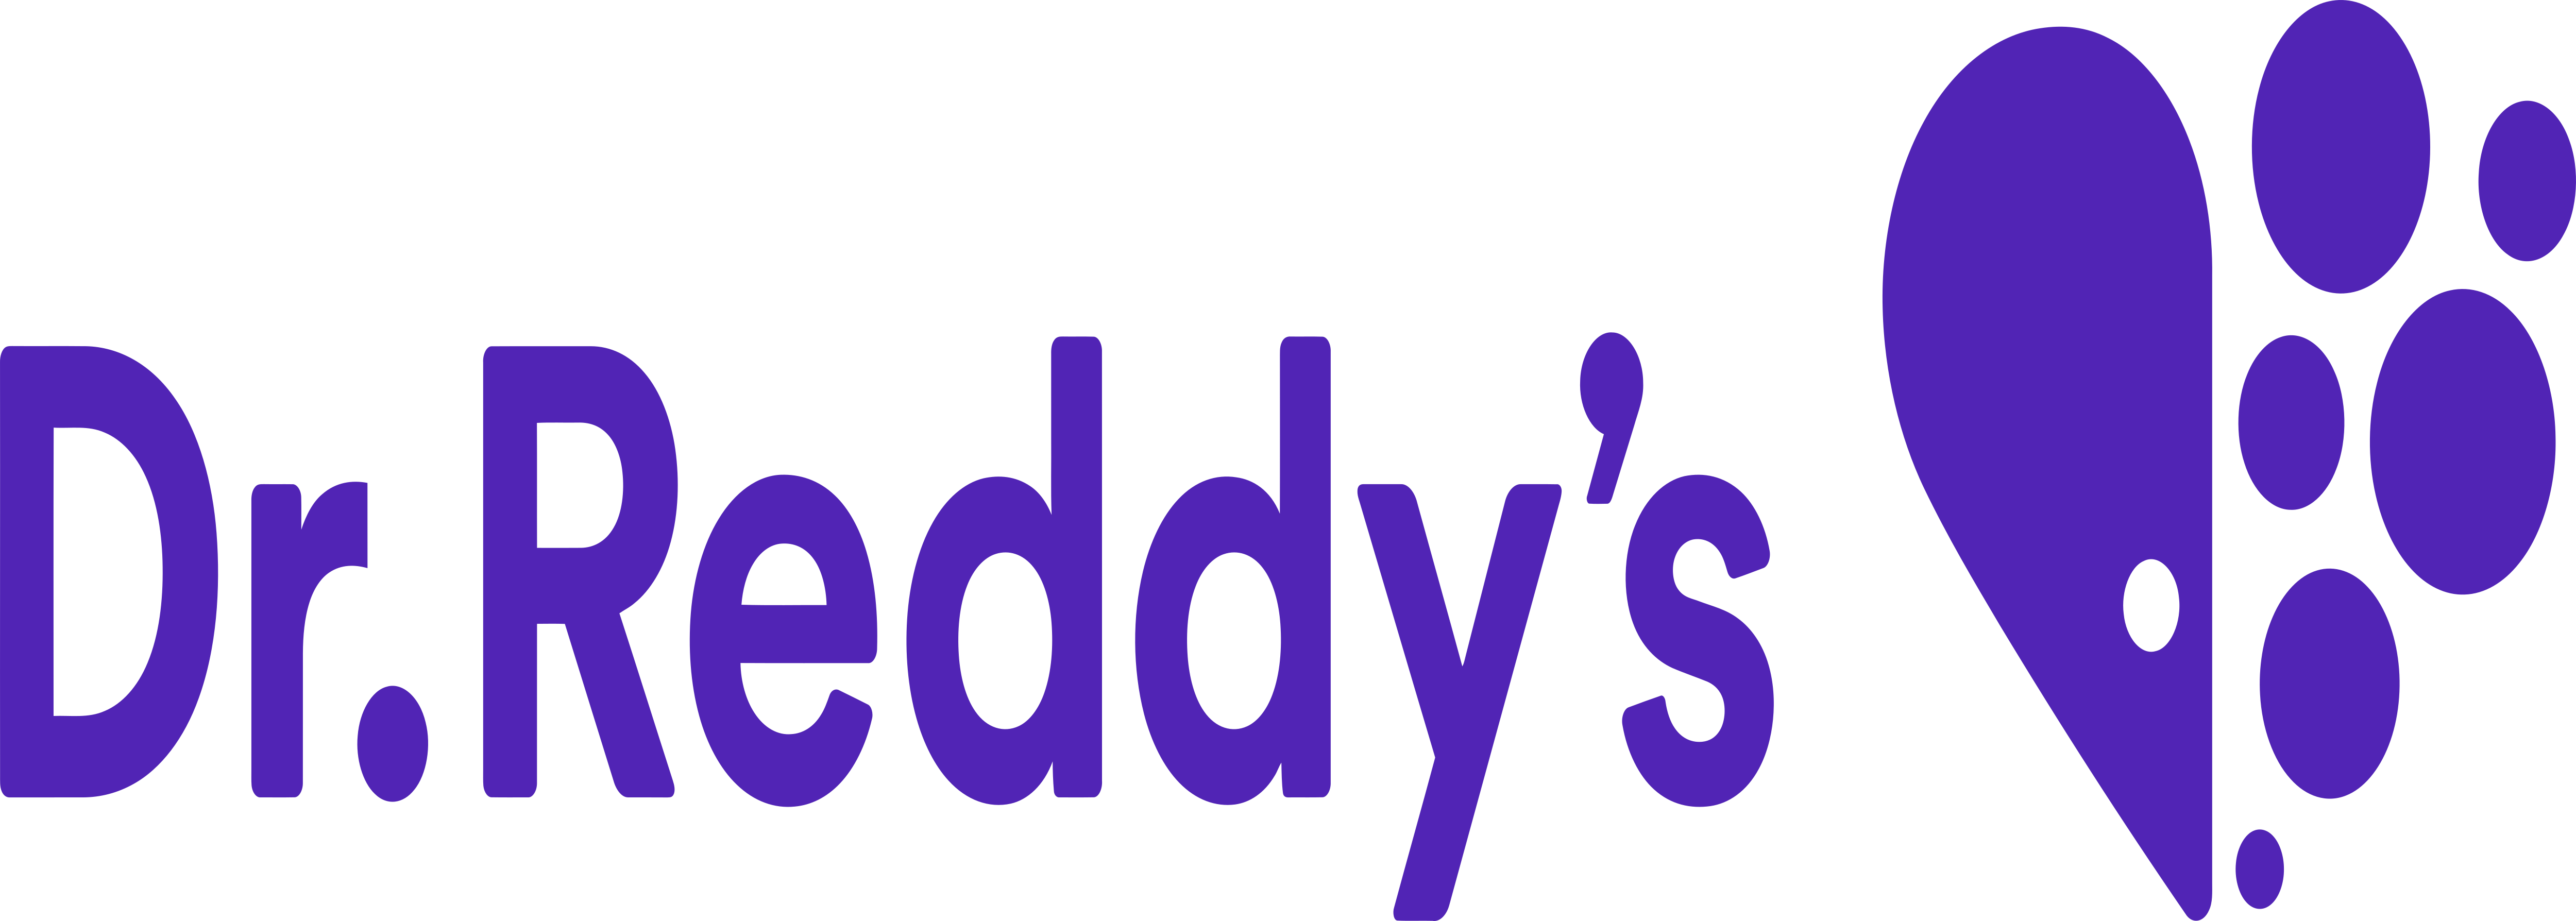 Доктор Реддис. Др Реддис логотип. Компания Dr. Reddy’s Laboratories. Доктор Реддис Лабораторис.